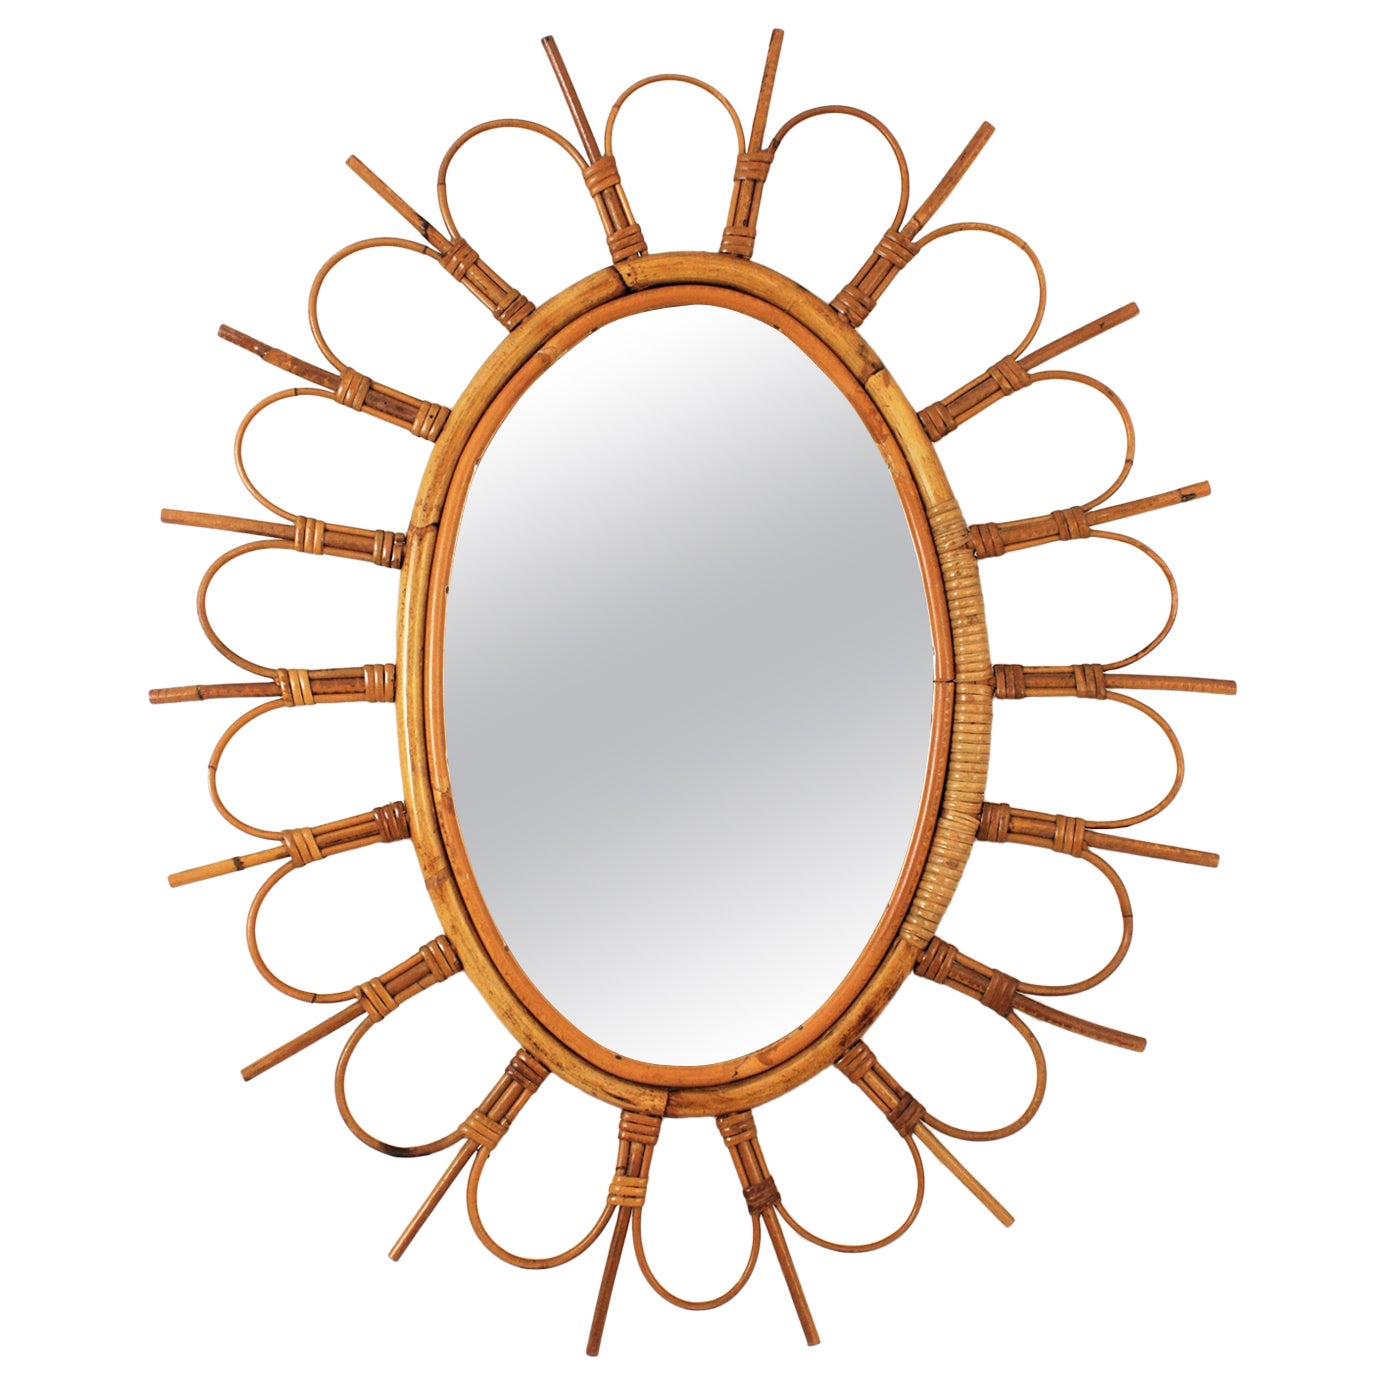 Rattan Oval Sunburst Flower Mirror from France, 1960s For Sale